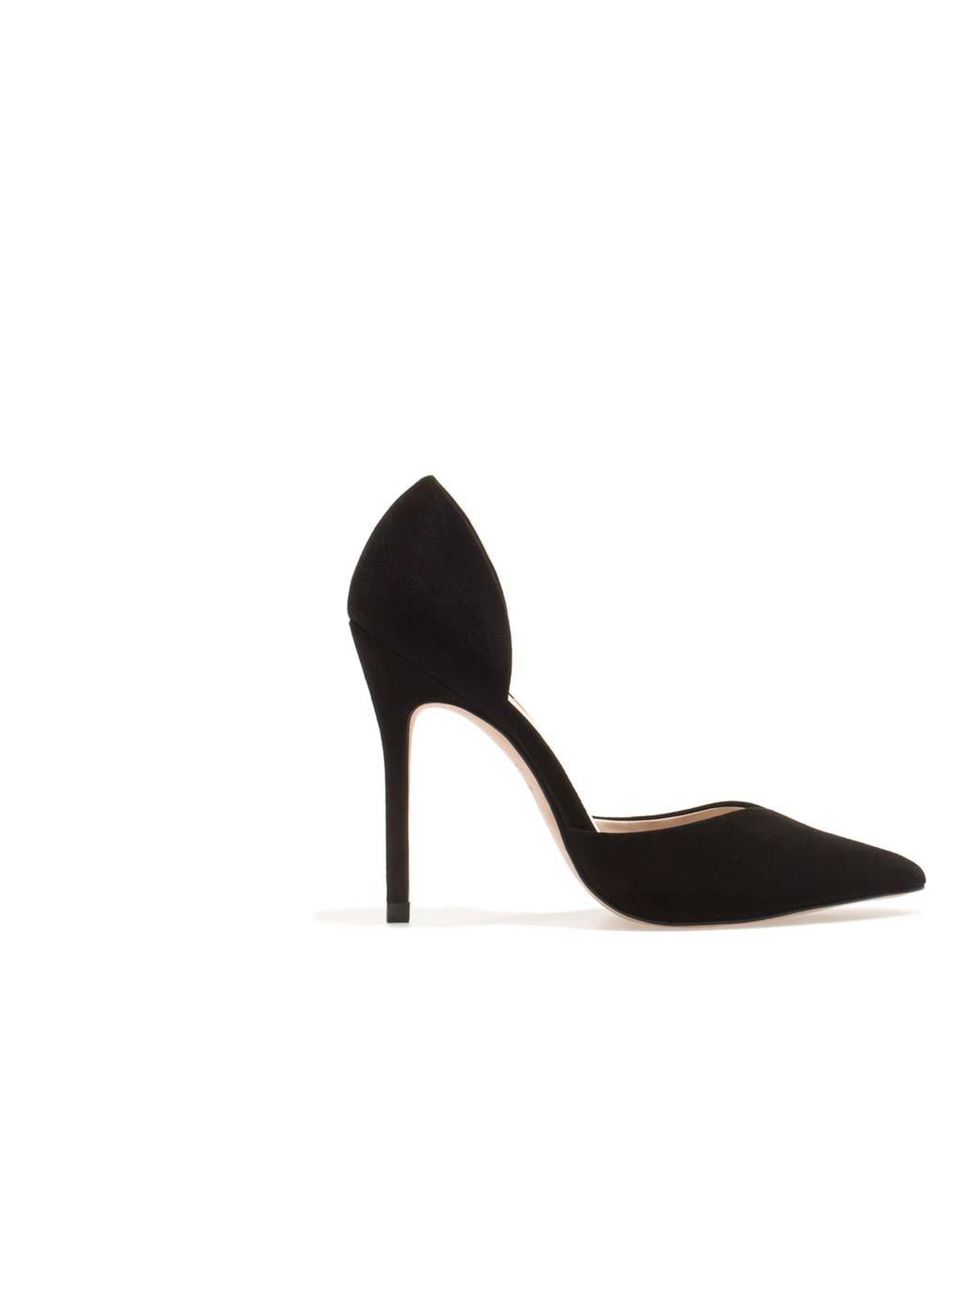 <p><a href="http://www.zara.com/webapp/wcs/stores/servlet/product/uk/en/zara-neu-W2012-s/328515/1049903/HIGH%20HEEL%20VAMP%20SHOE">Zara</a> black leather court heels £59.99</p>